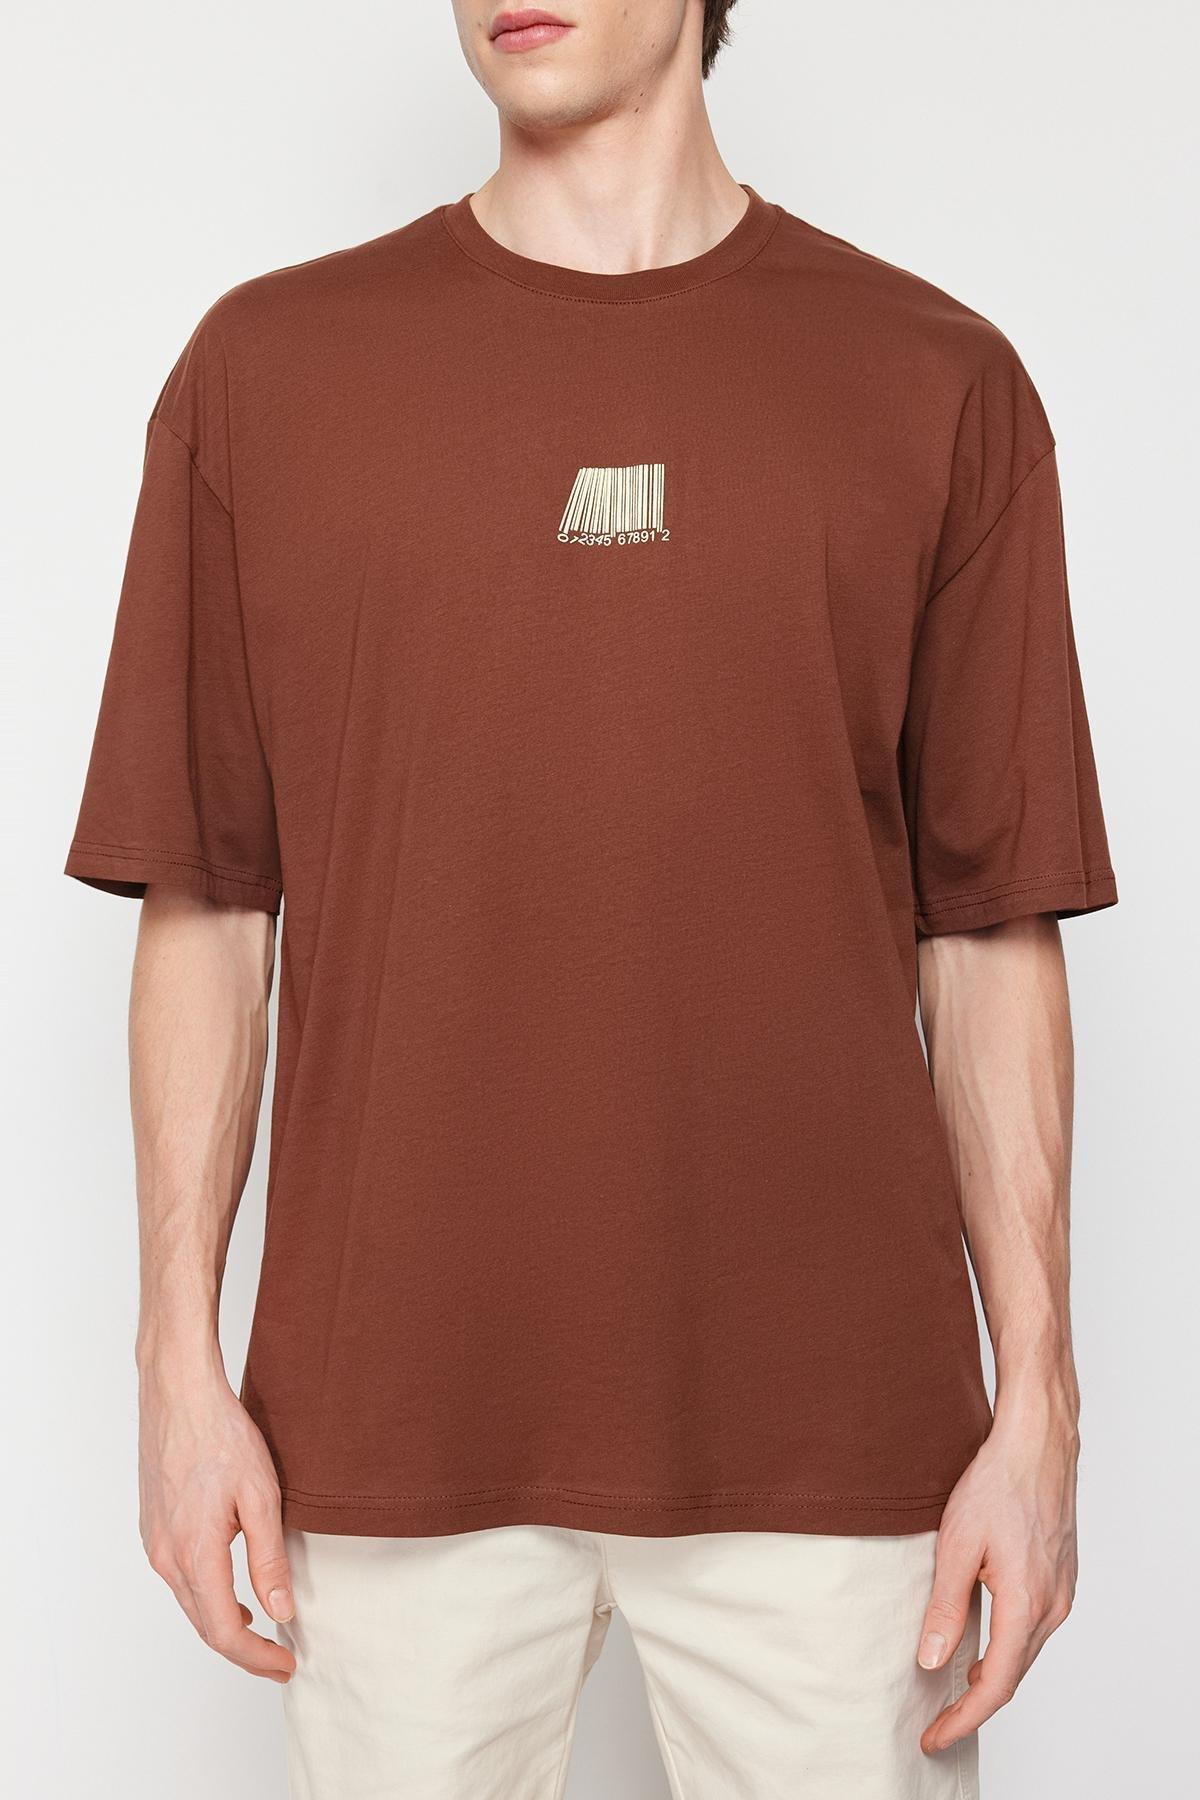 Trendyol - Brown Oversize Printed Cotton T-Shirt